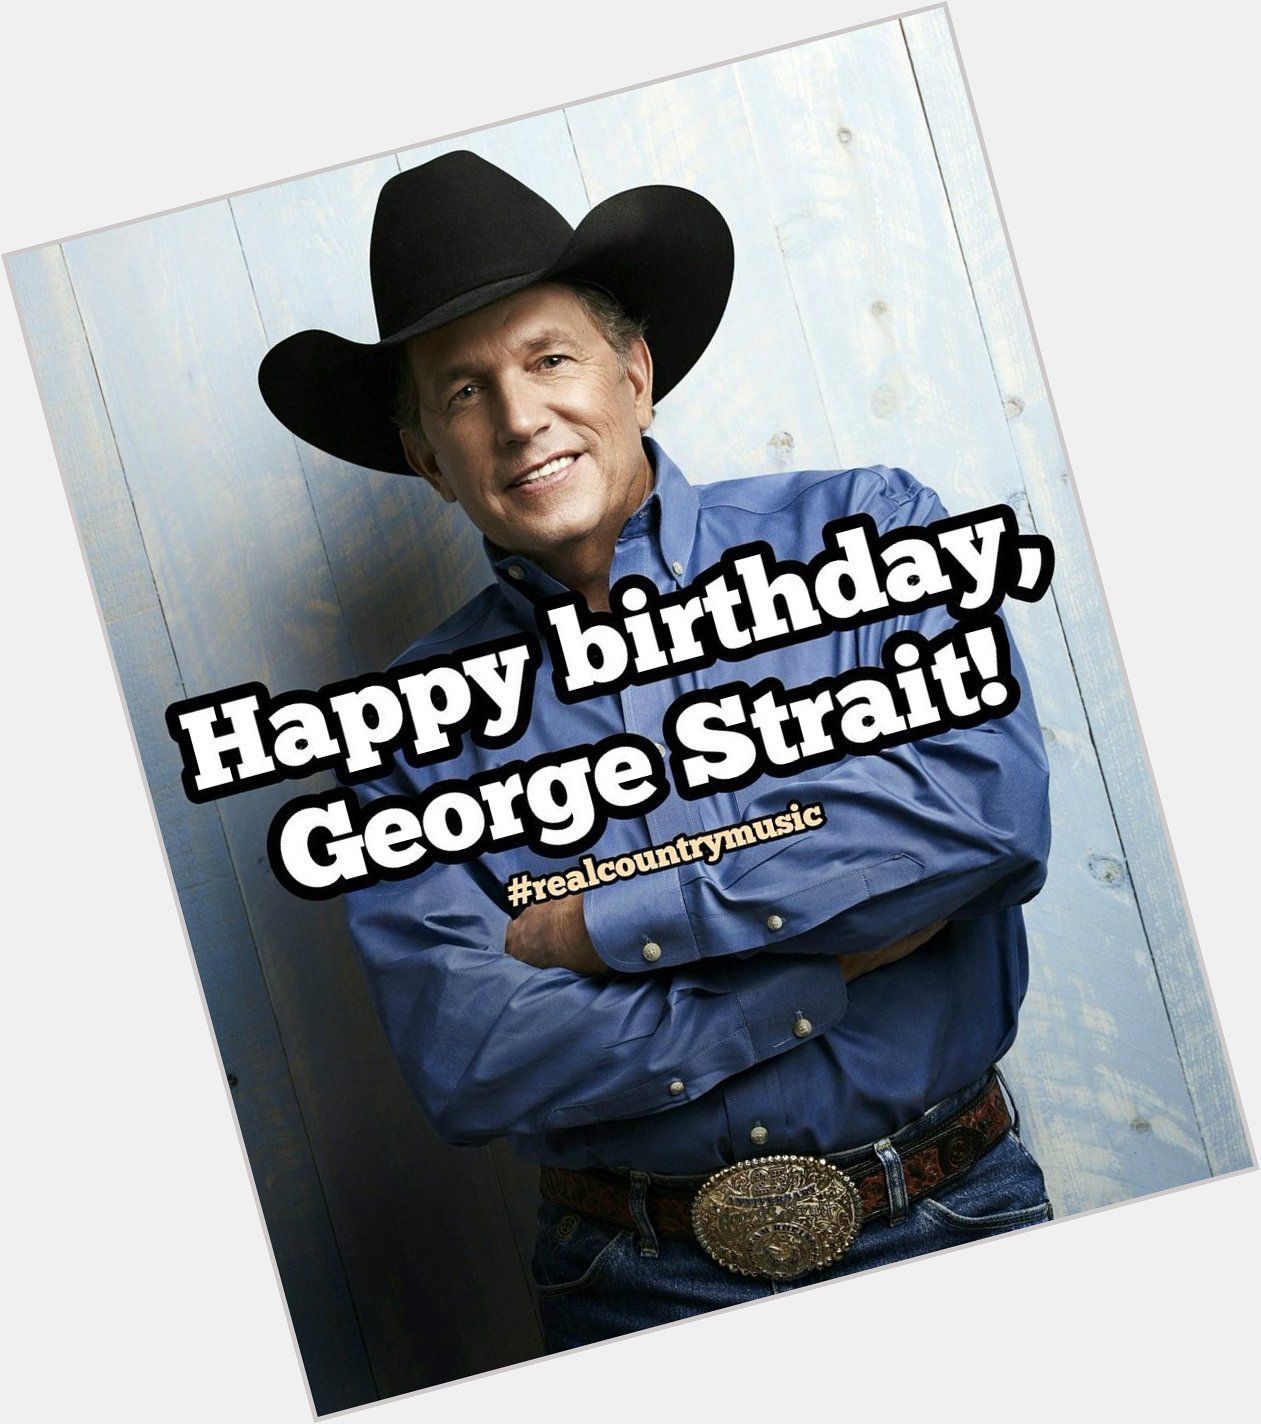 Happy 66th birthday, George Strait!

Keep it Country, y\all!   